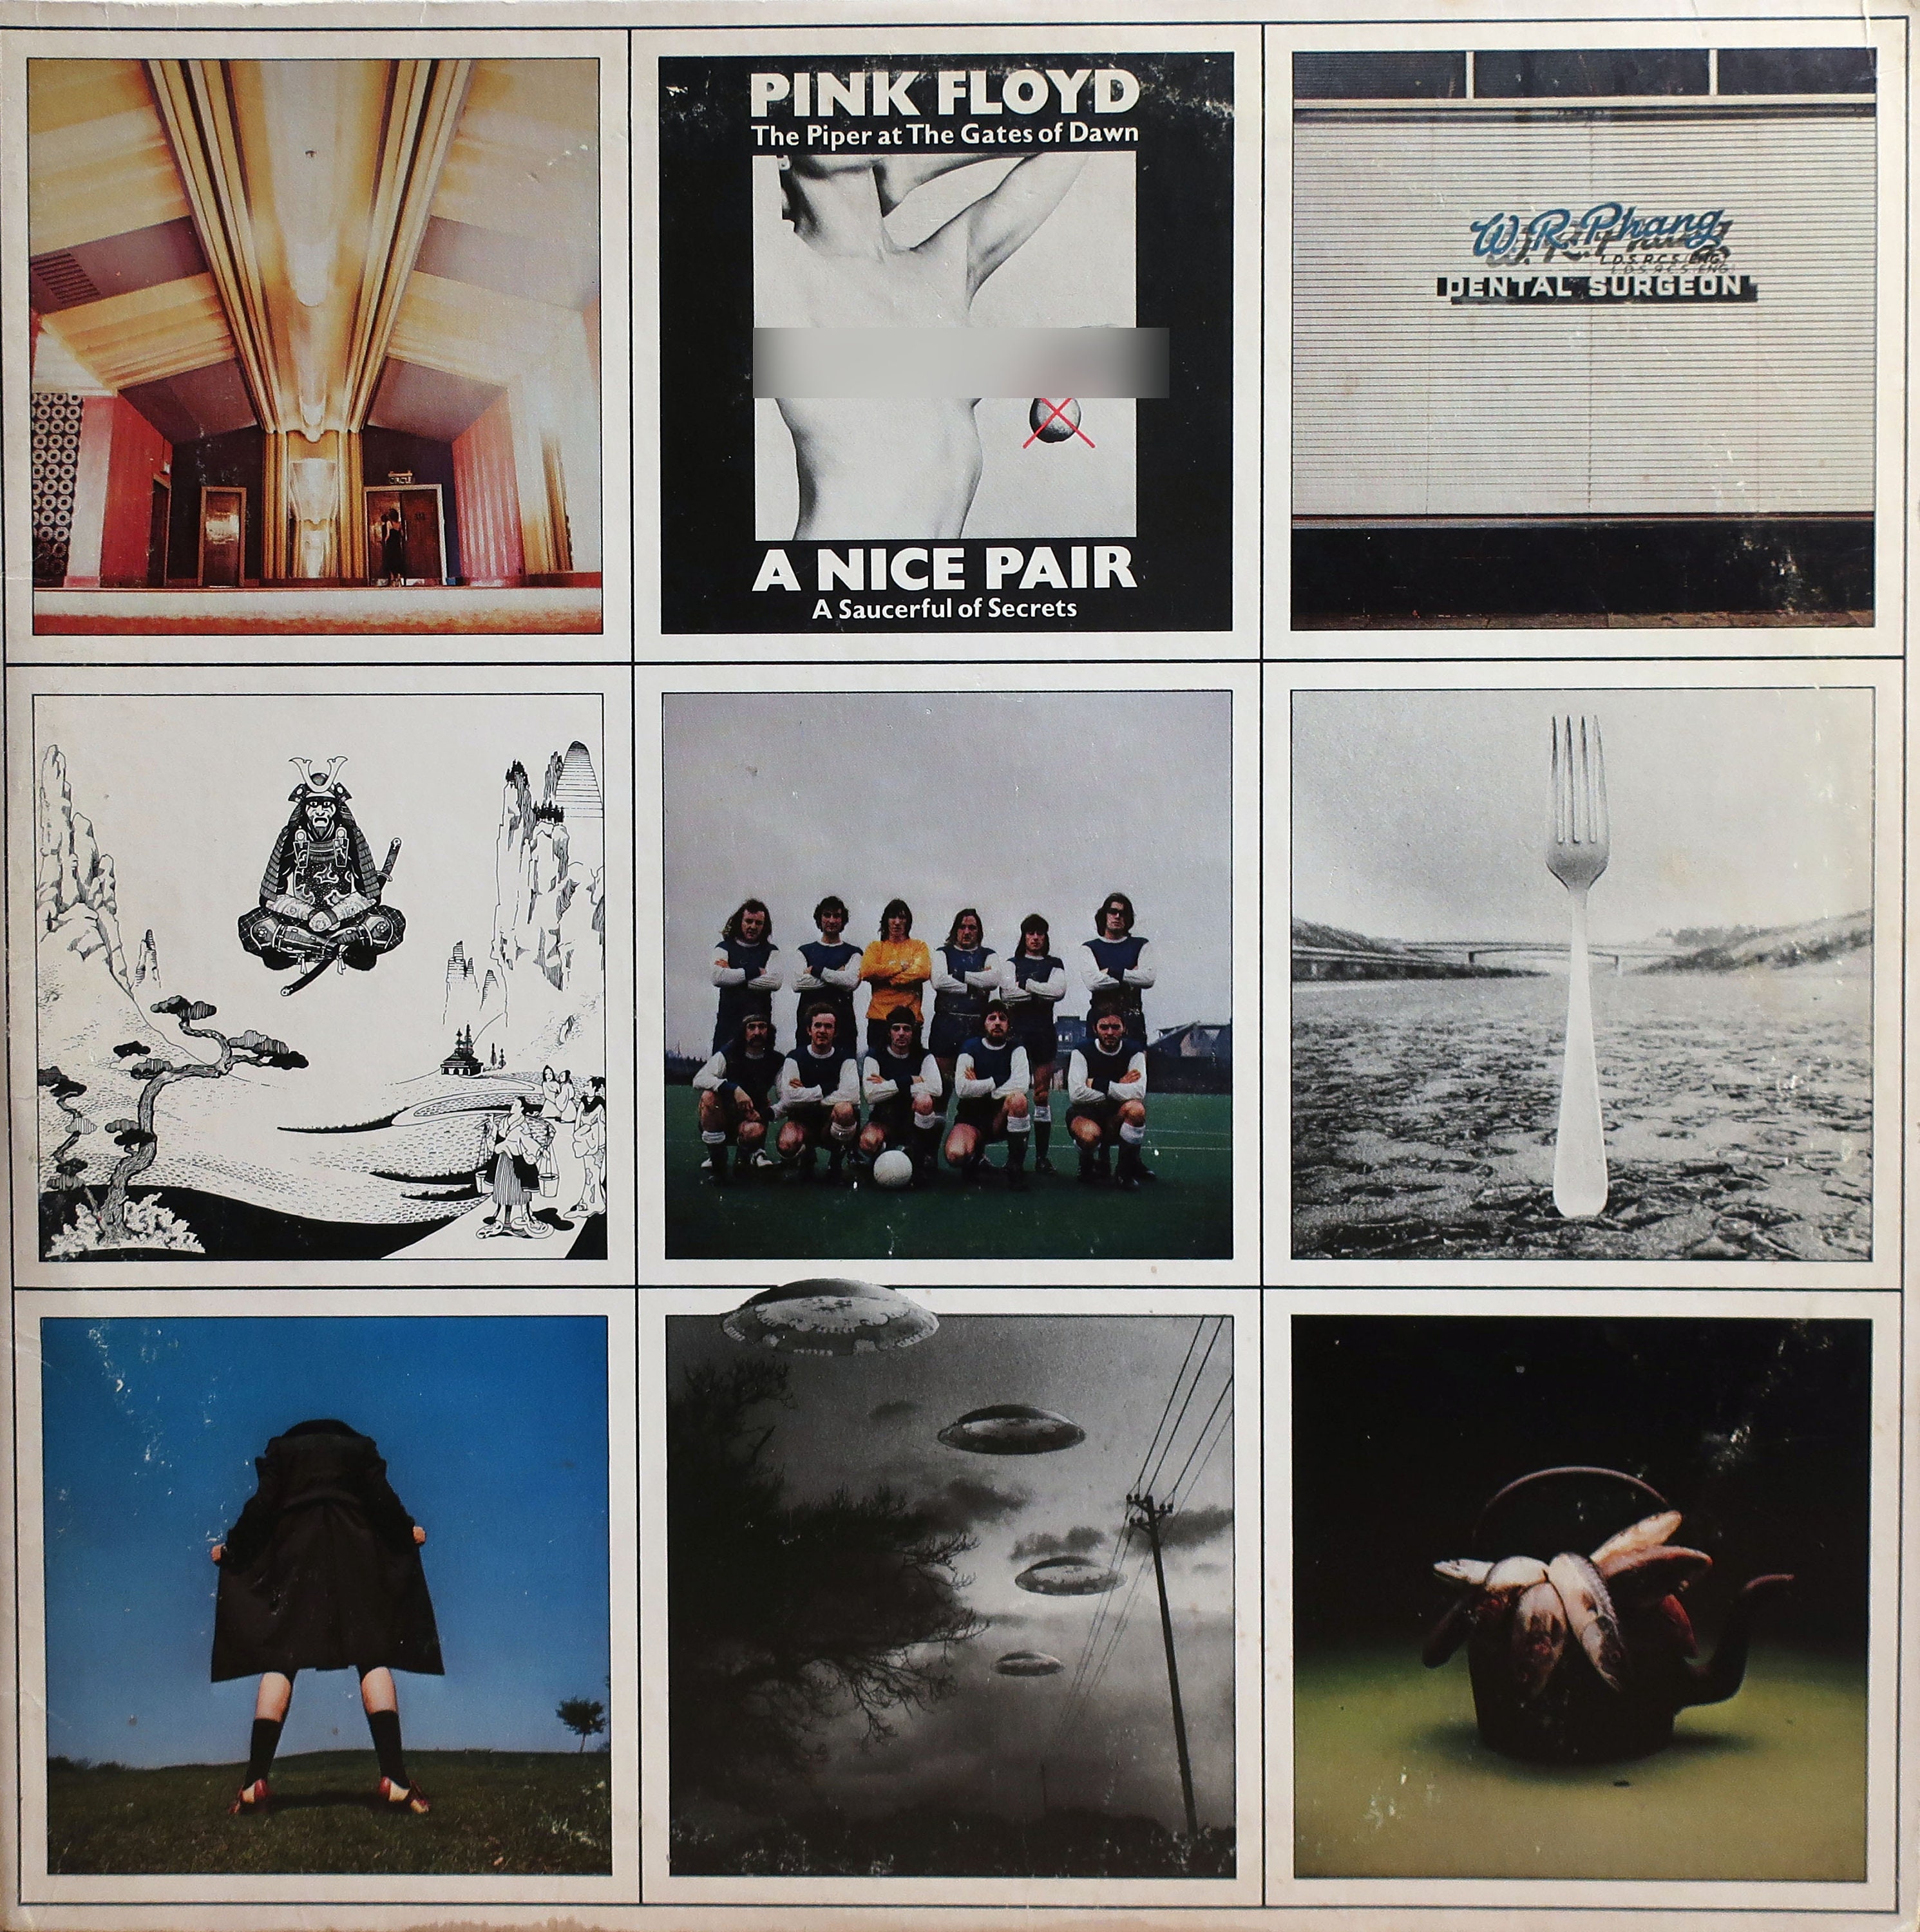 kort svimmel Memo Rare Original '73 PINK FLOYD A Nice Pair Harvest Records - Etsy